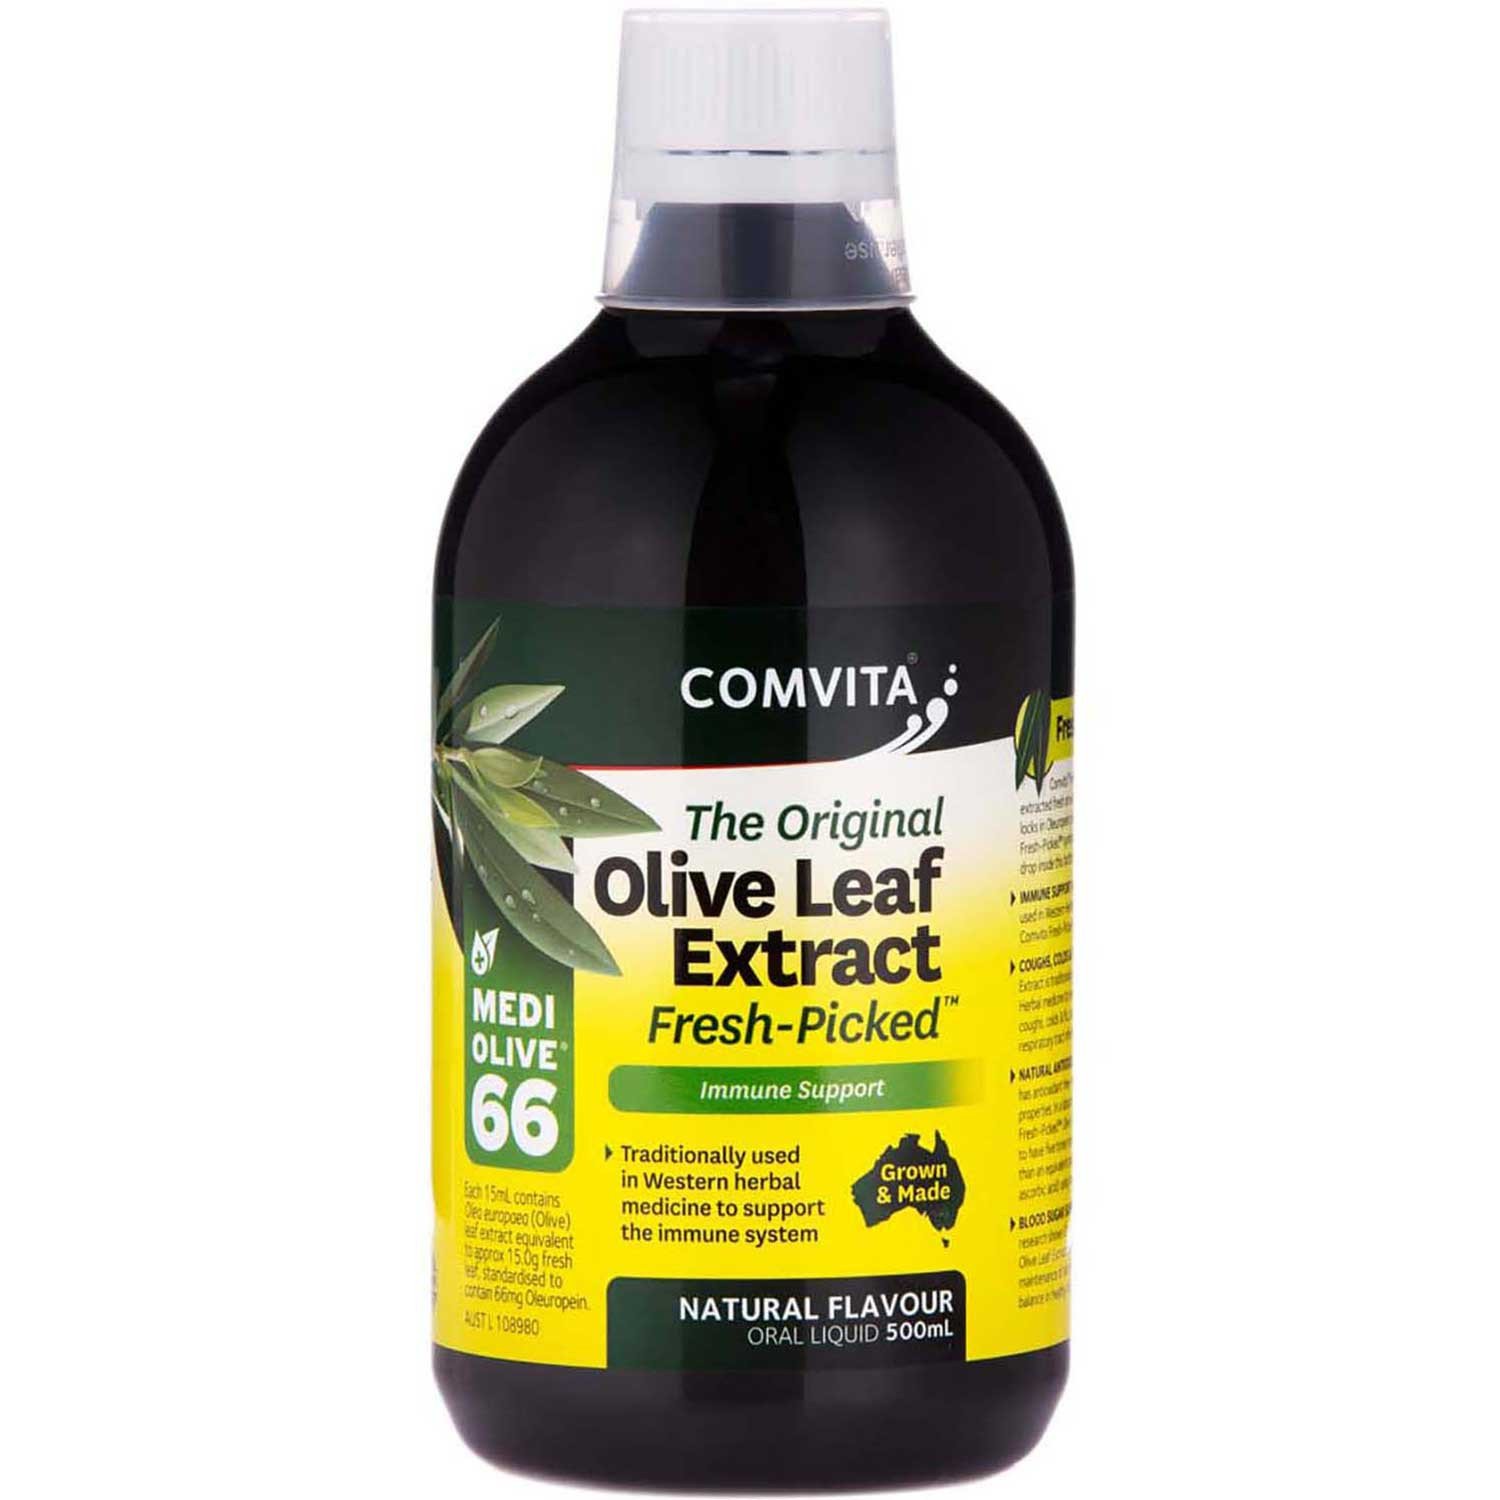 Comvita Olive Leaf Extract - Natural Flavor, 500 ml